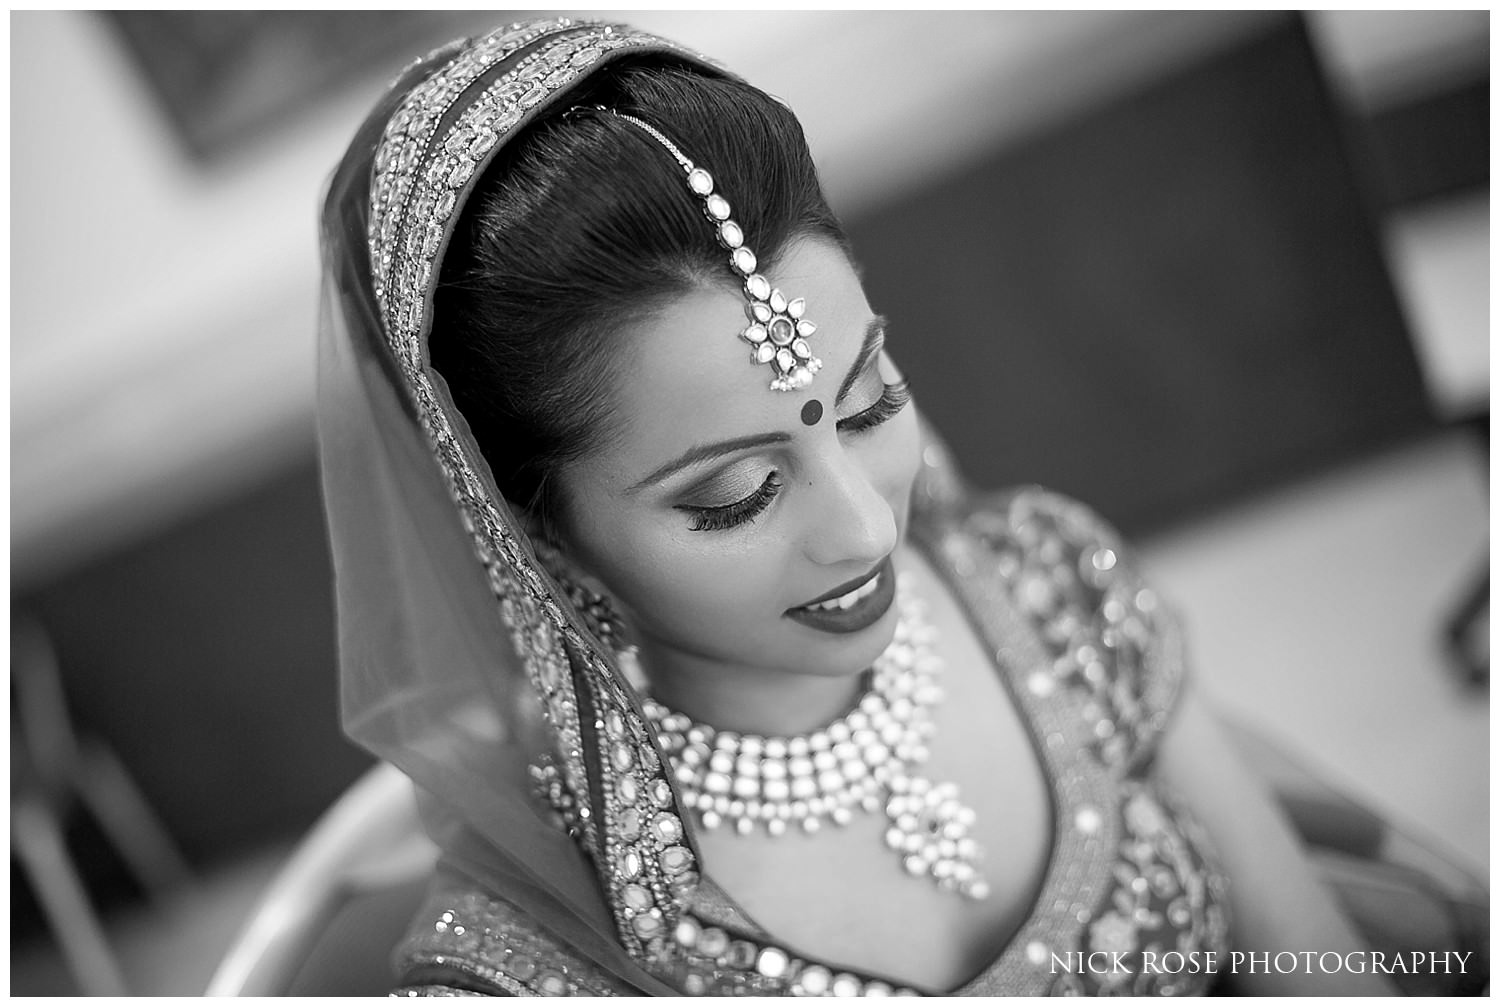  Asian bride at East Wintergarden Hindu wedding in Canary Wharf London 